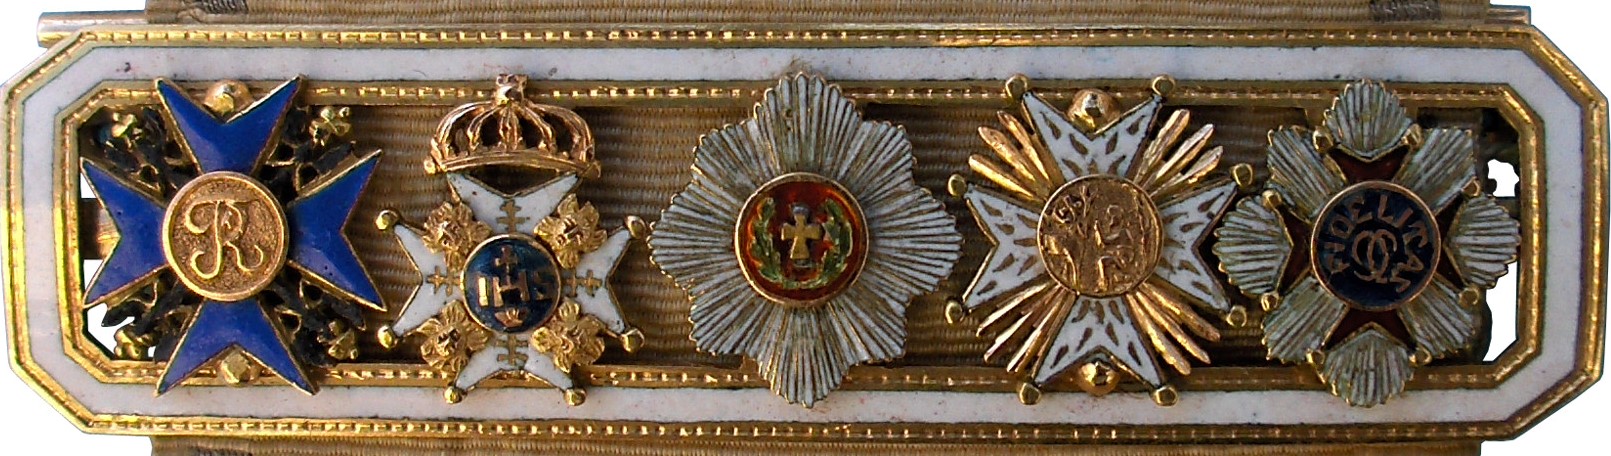 Miniature Medal Bar of  Grand Duke Karl Ludwig Friedrich von Baden.jpg